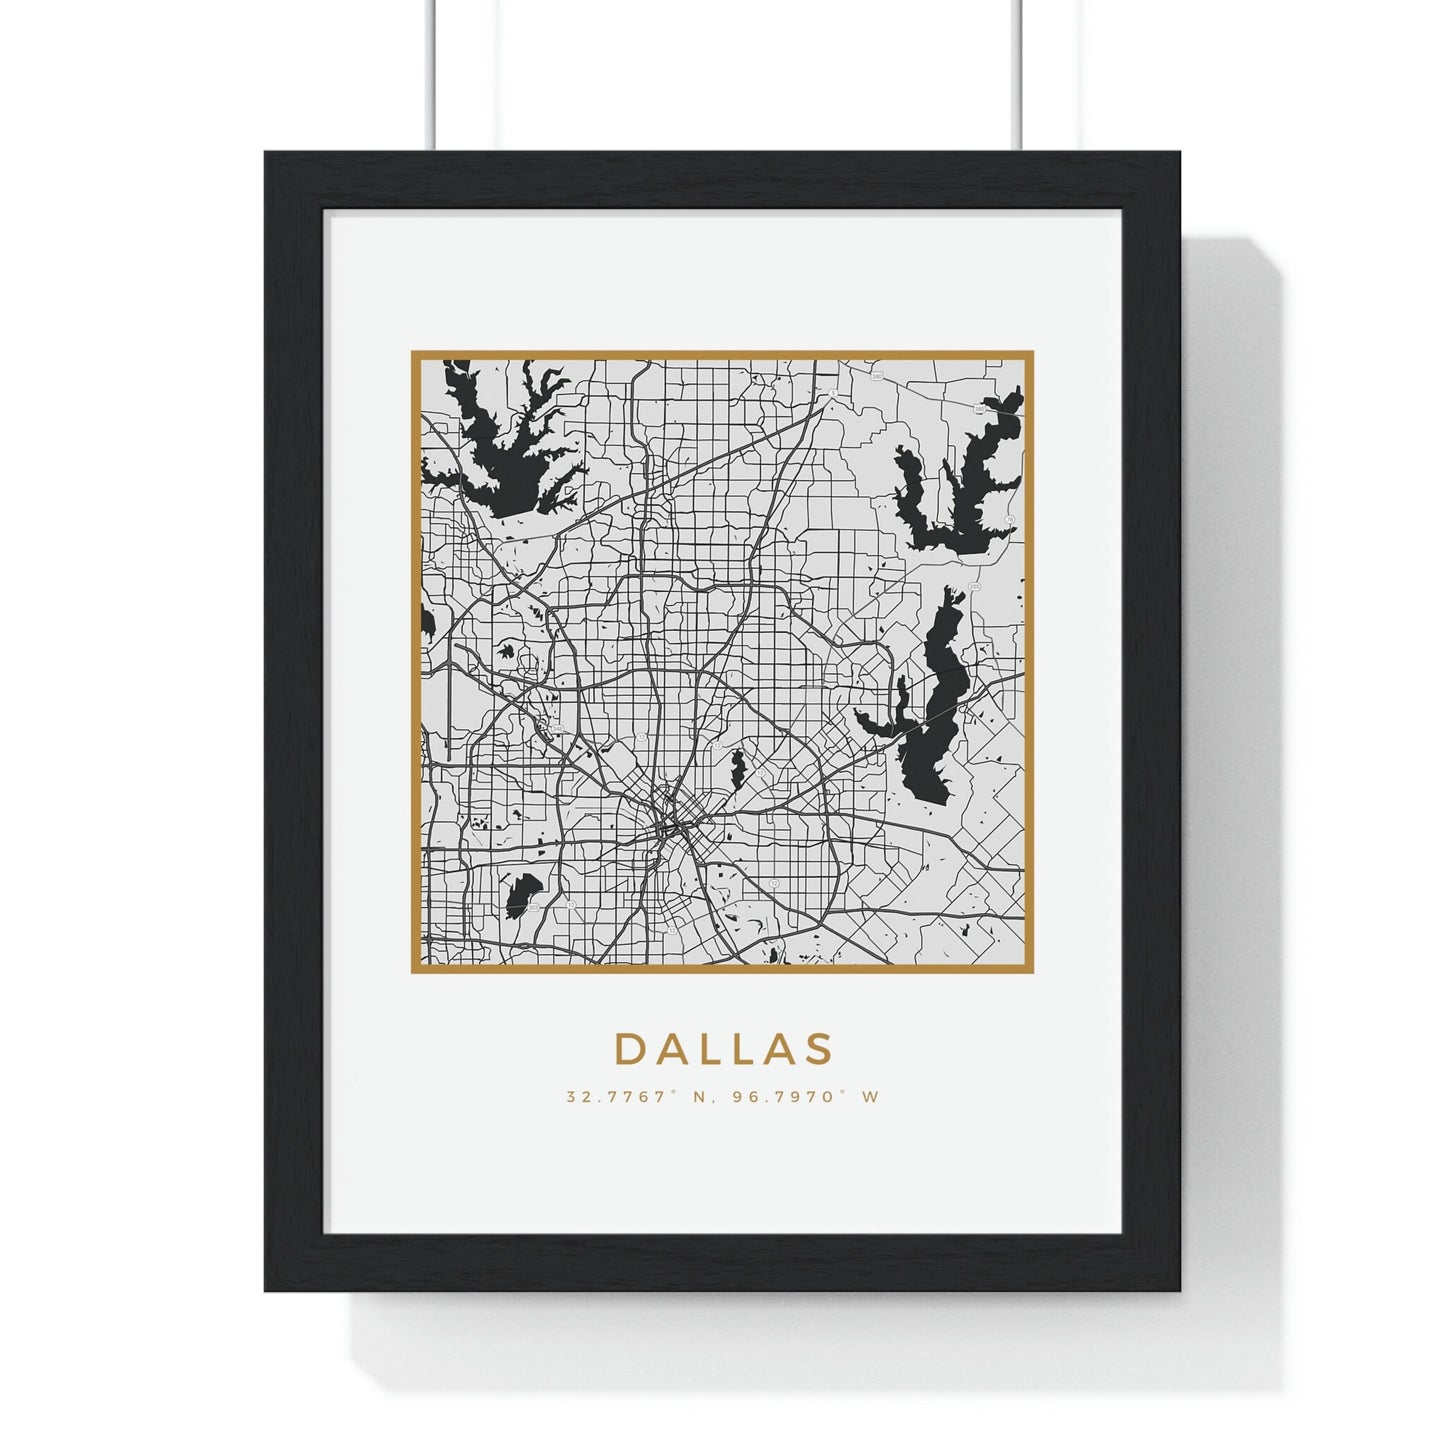 Dallas Hometown Premium Framed Poster (Golden Trim)